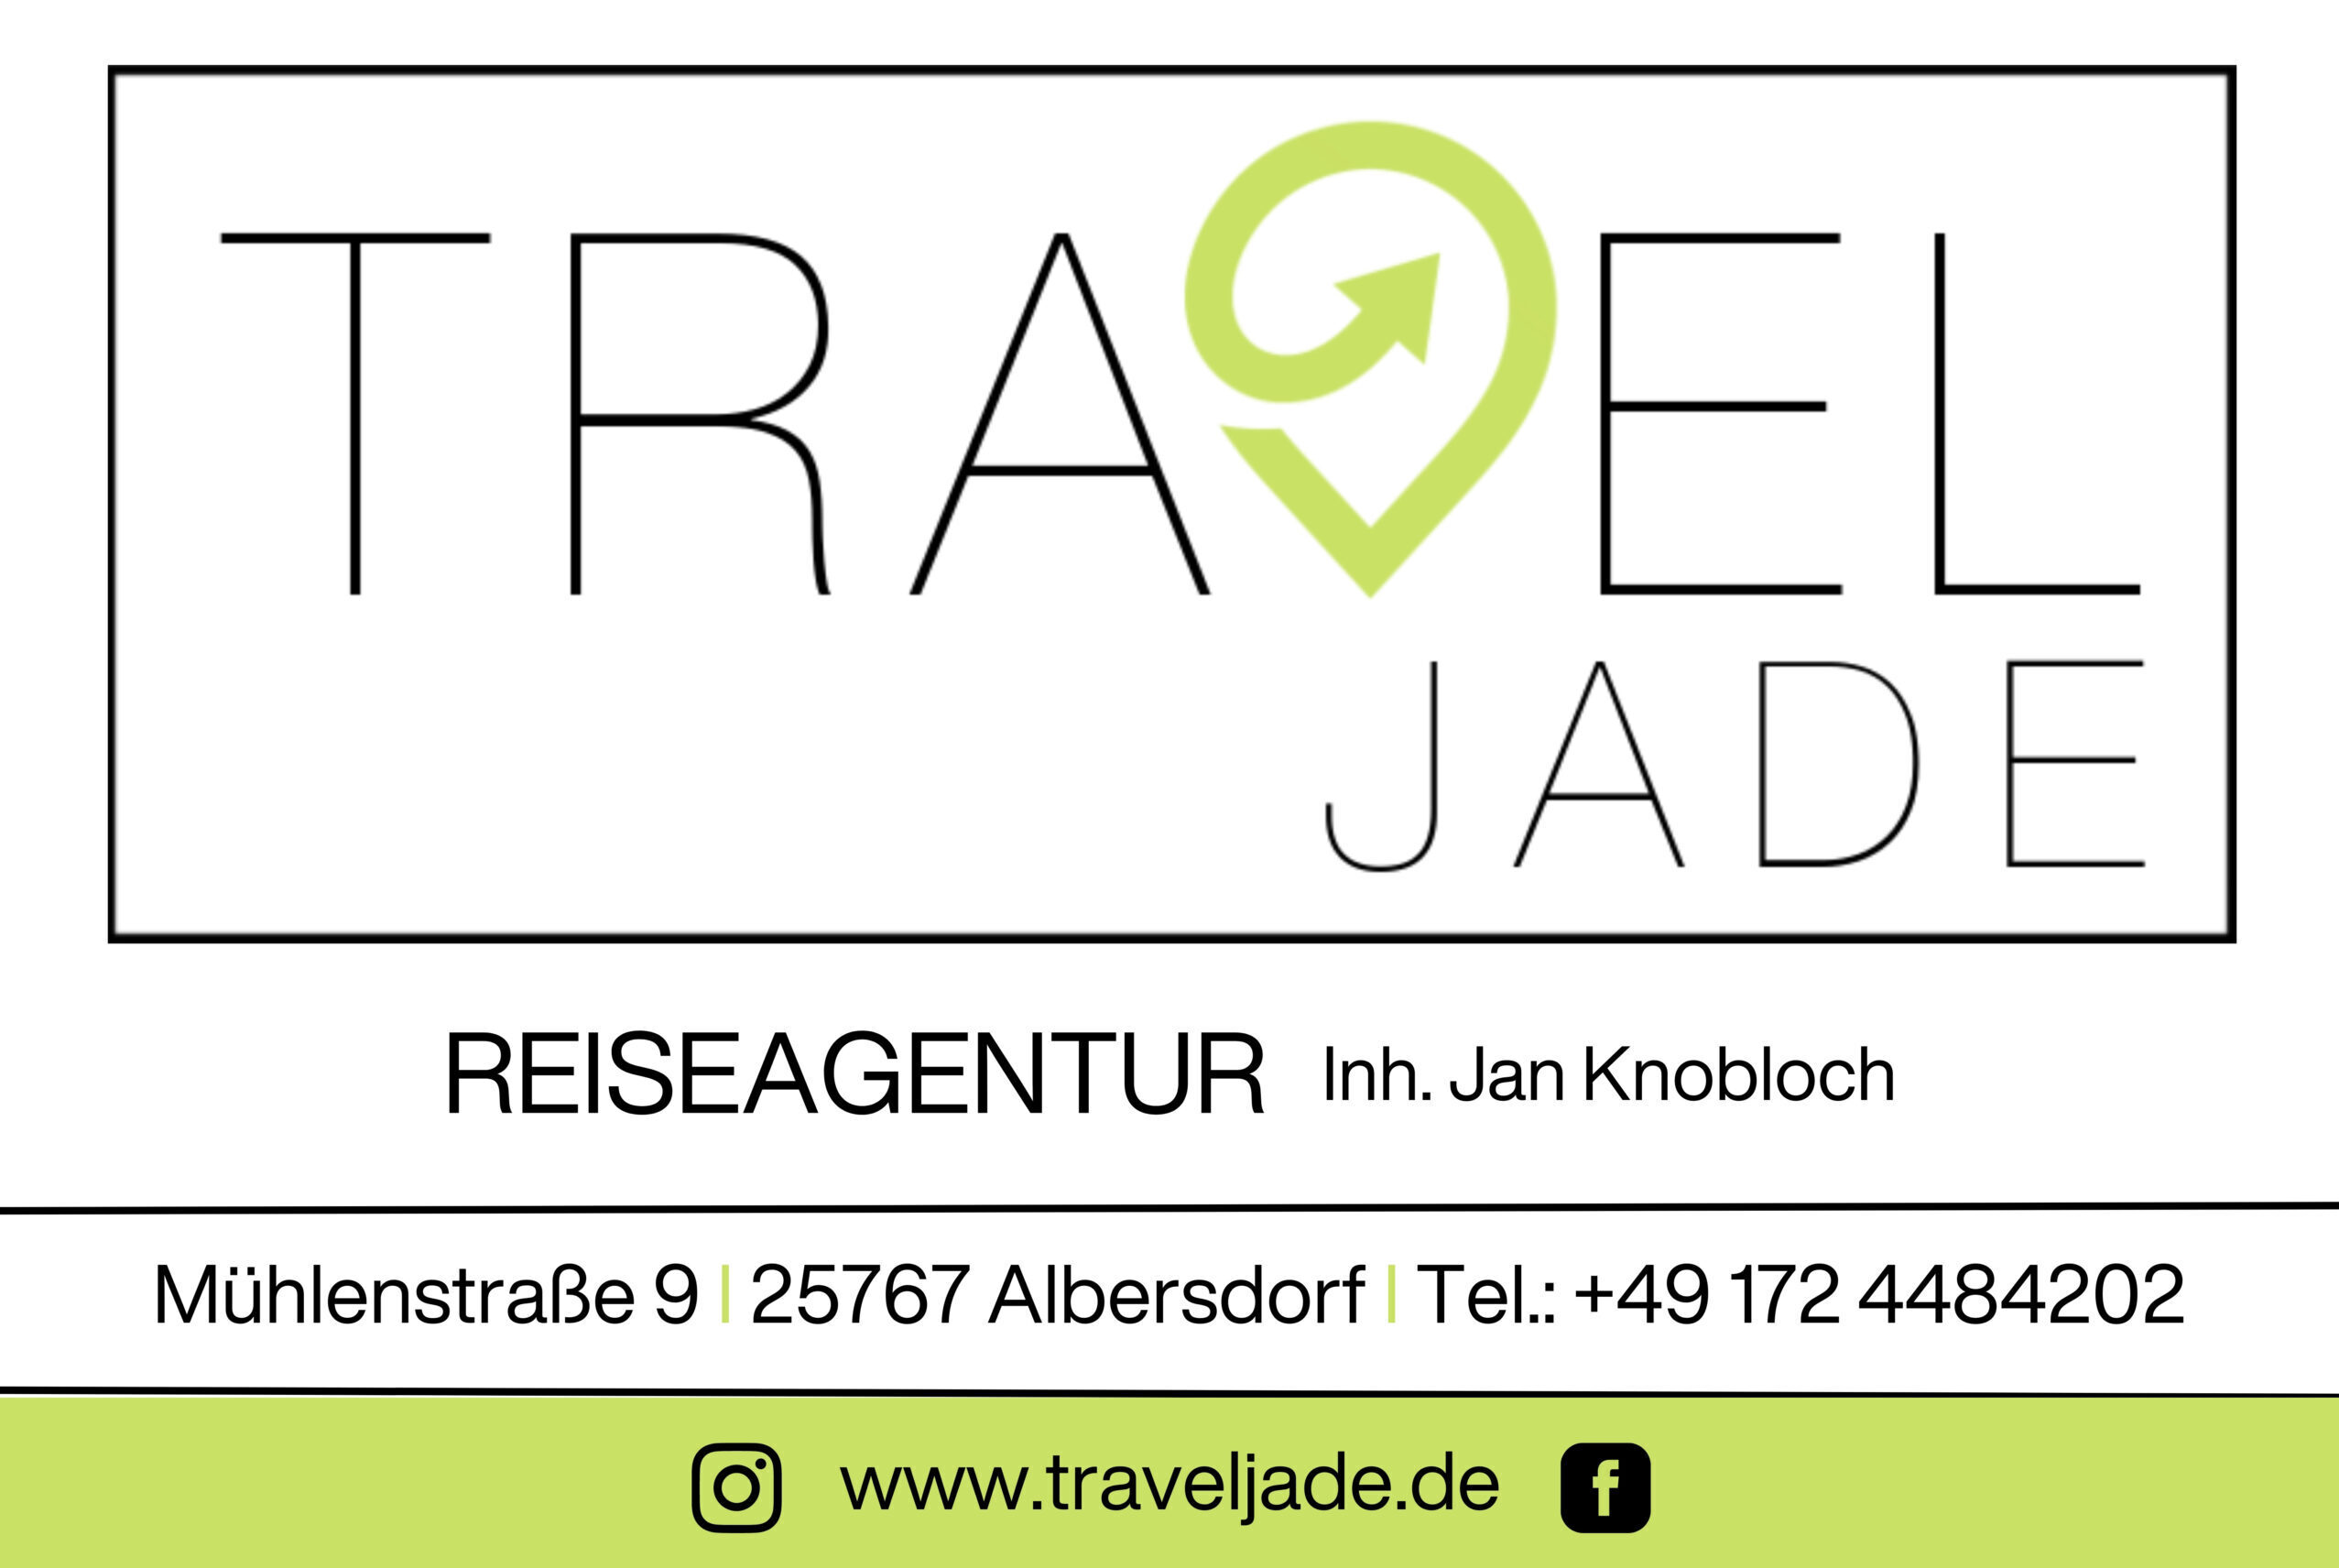 Travel Jade - Reiseagentur Visitenkarte